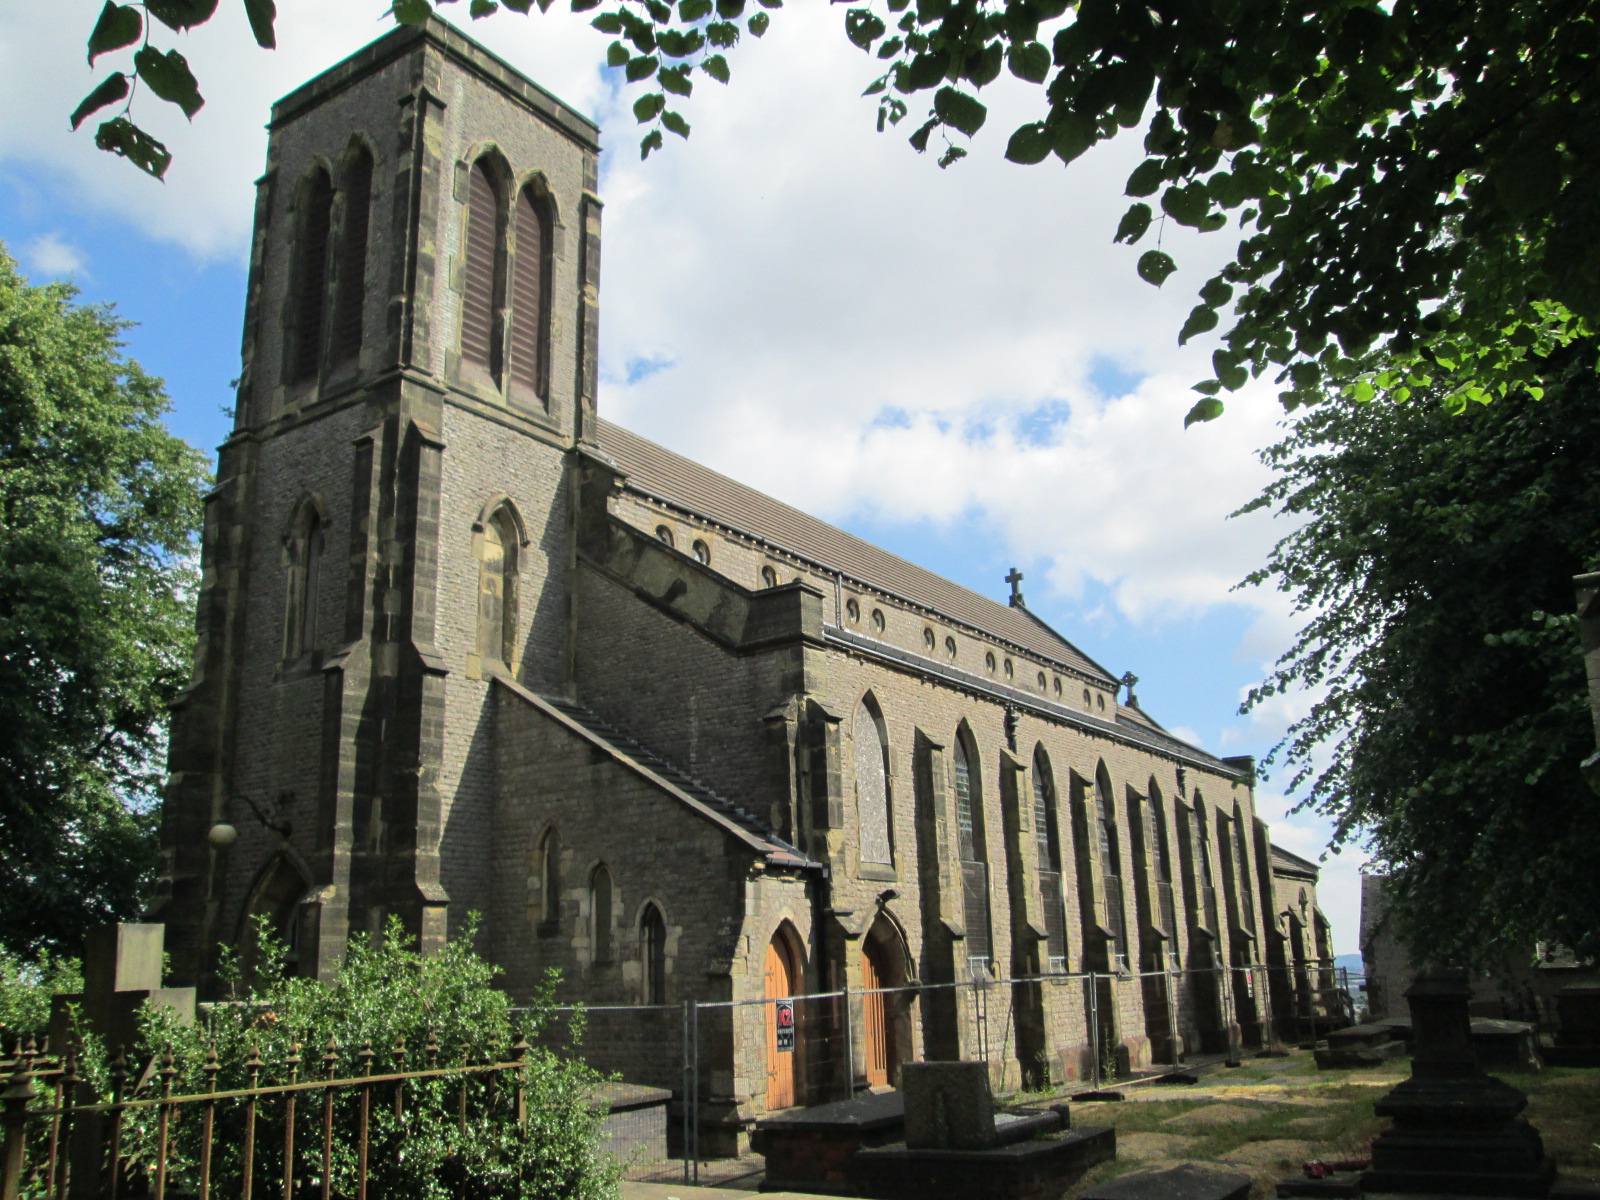 St John's Church, Dudley